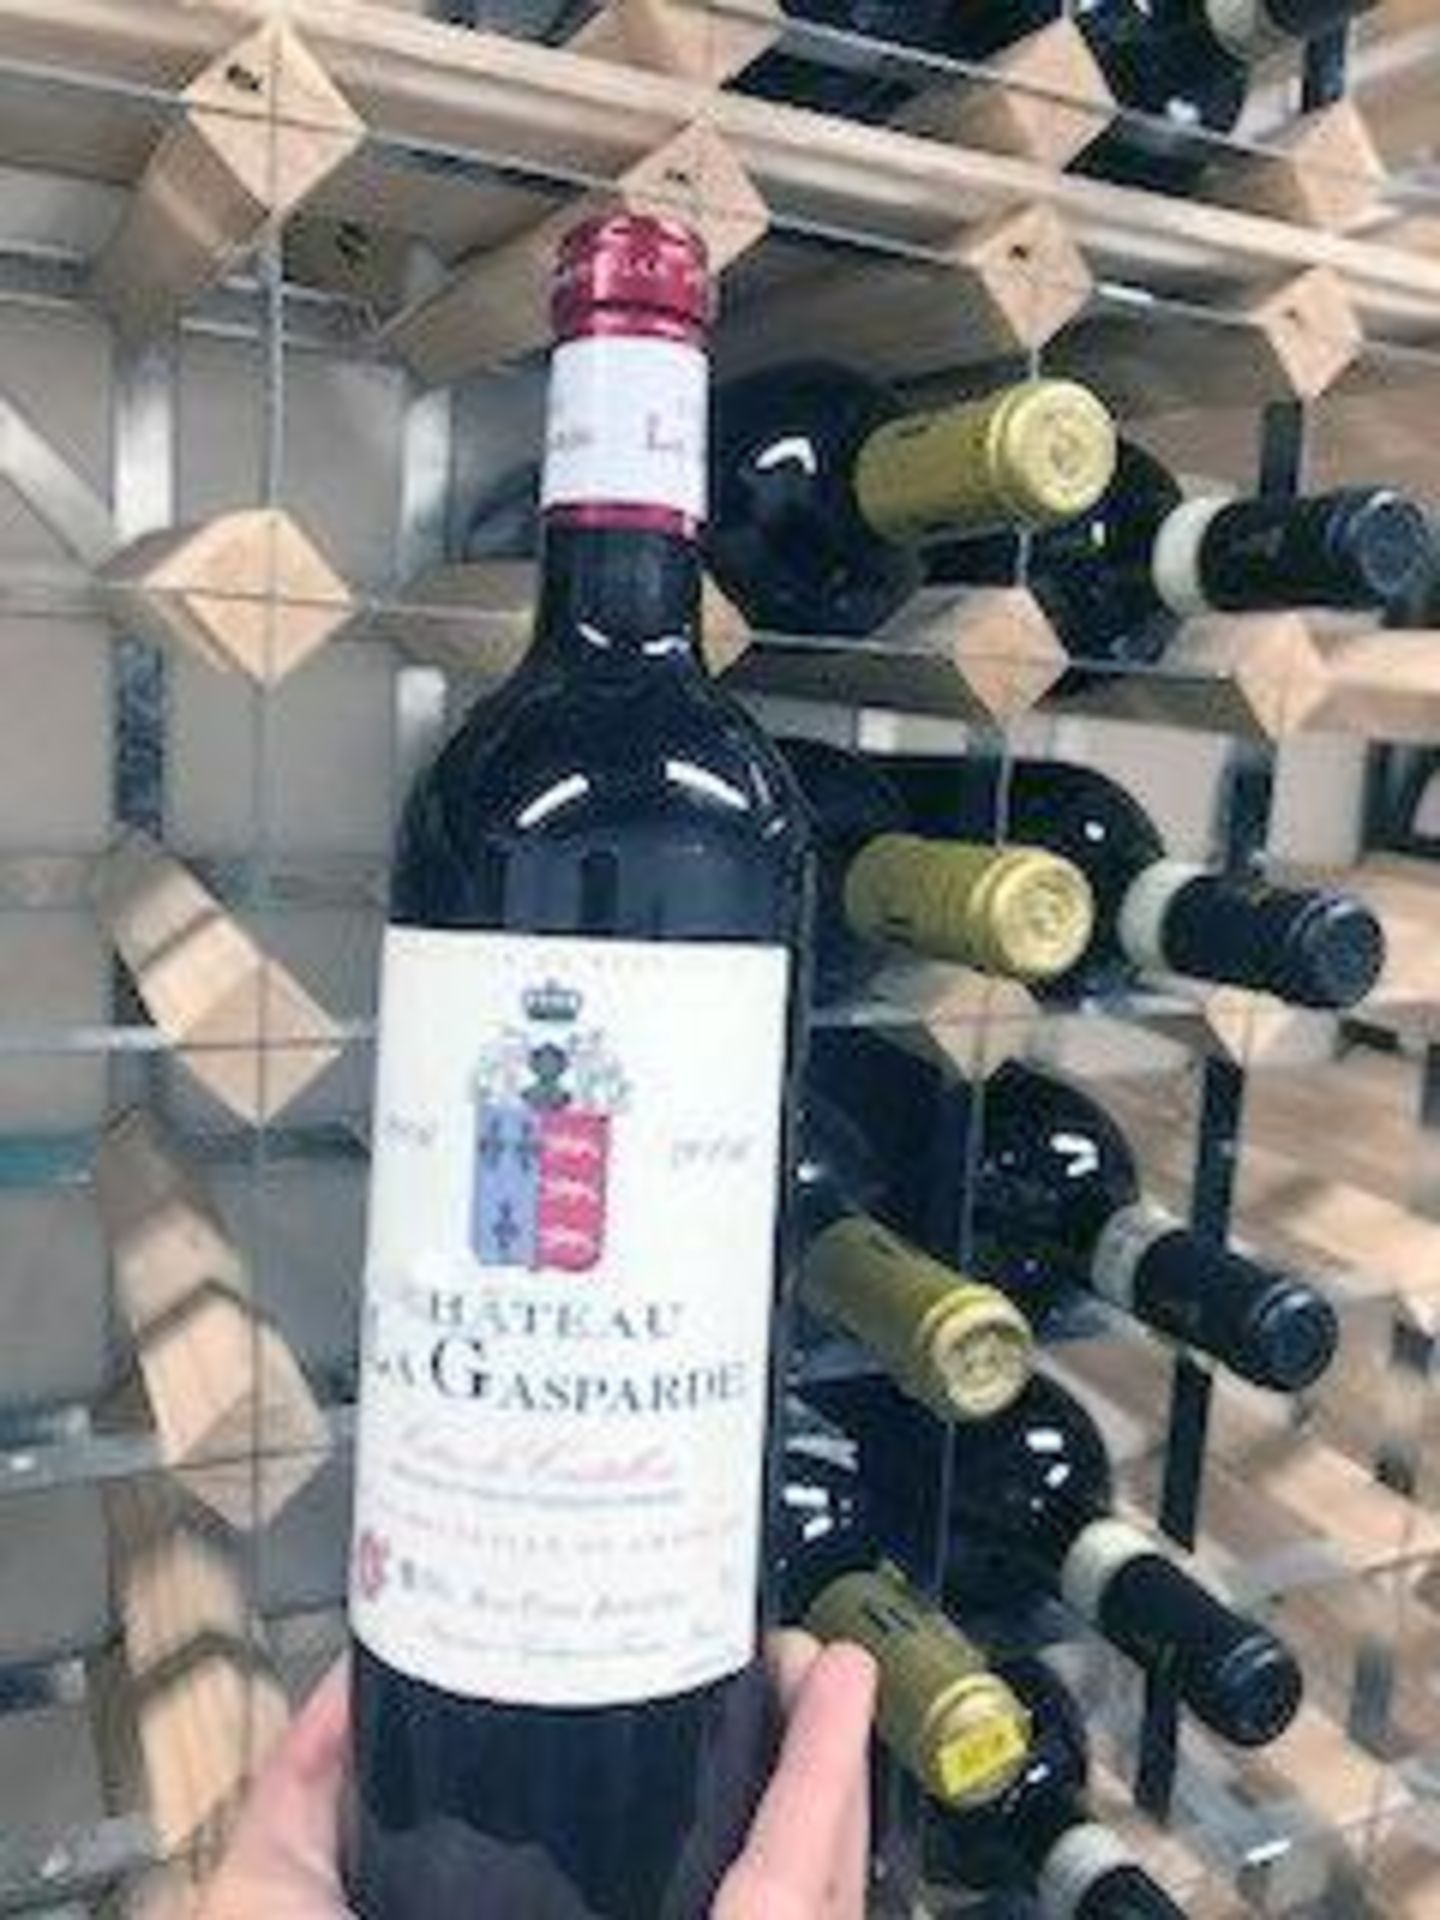 Red Wine - - Chateau La Gasparde Cotes Castillon 2006 1 X Bottle Bin Number (4086/2006)